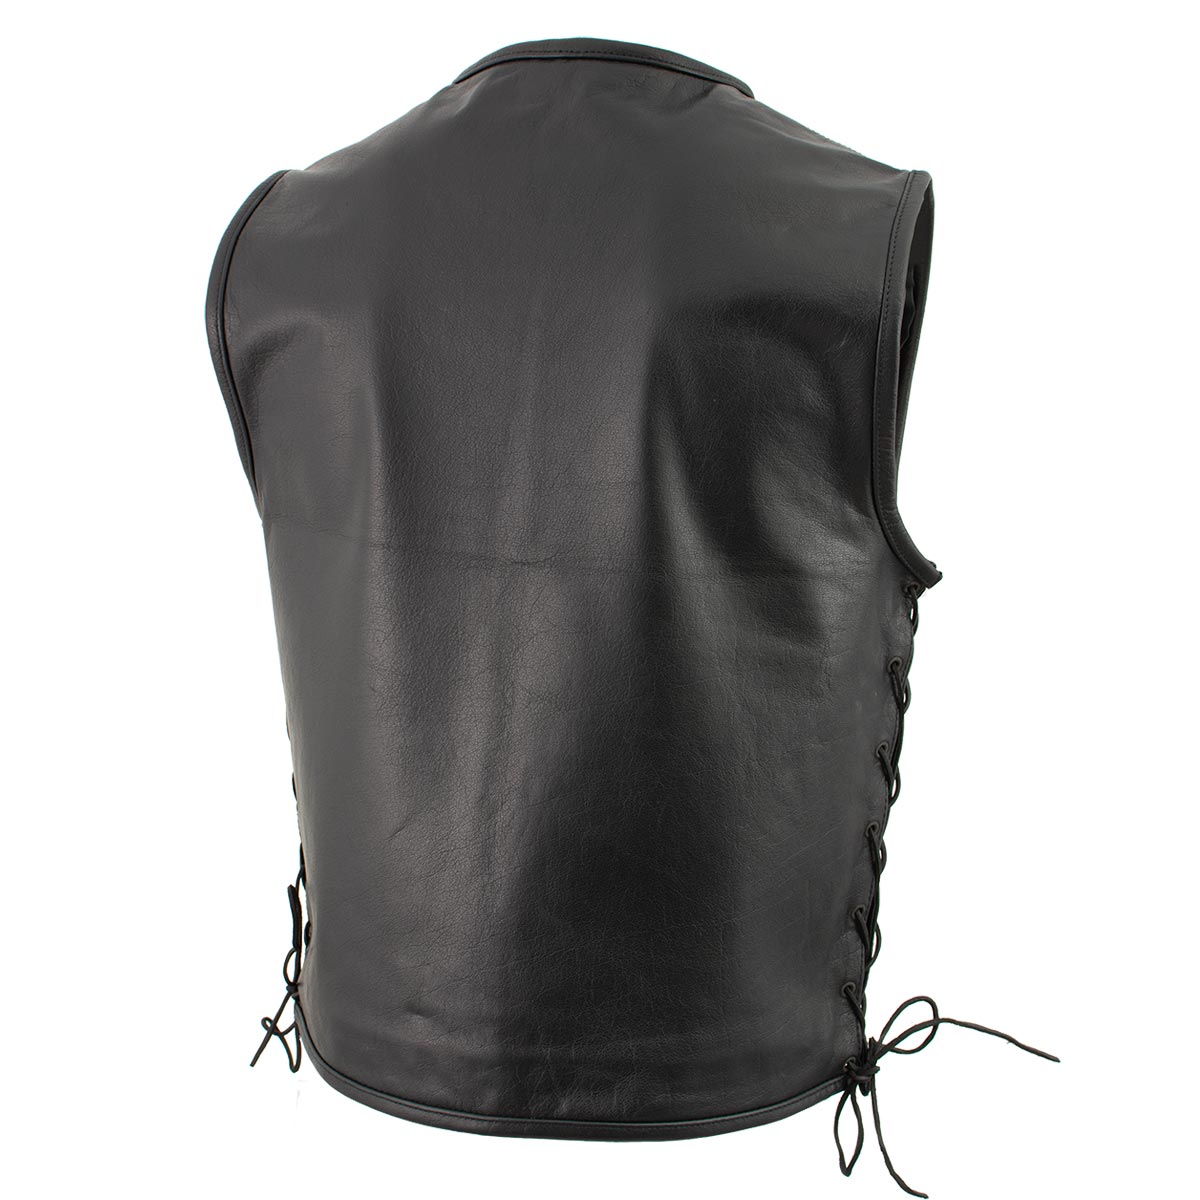 Xelement B95140 Men's 'Drifter' Black Advanced Collarless Leather Motorcycle Vest